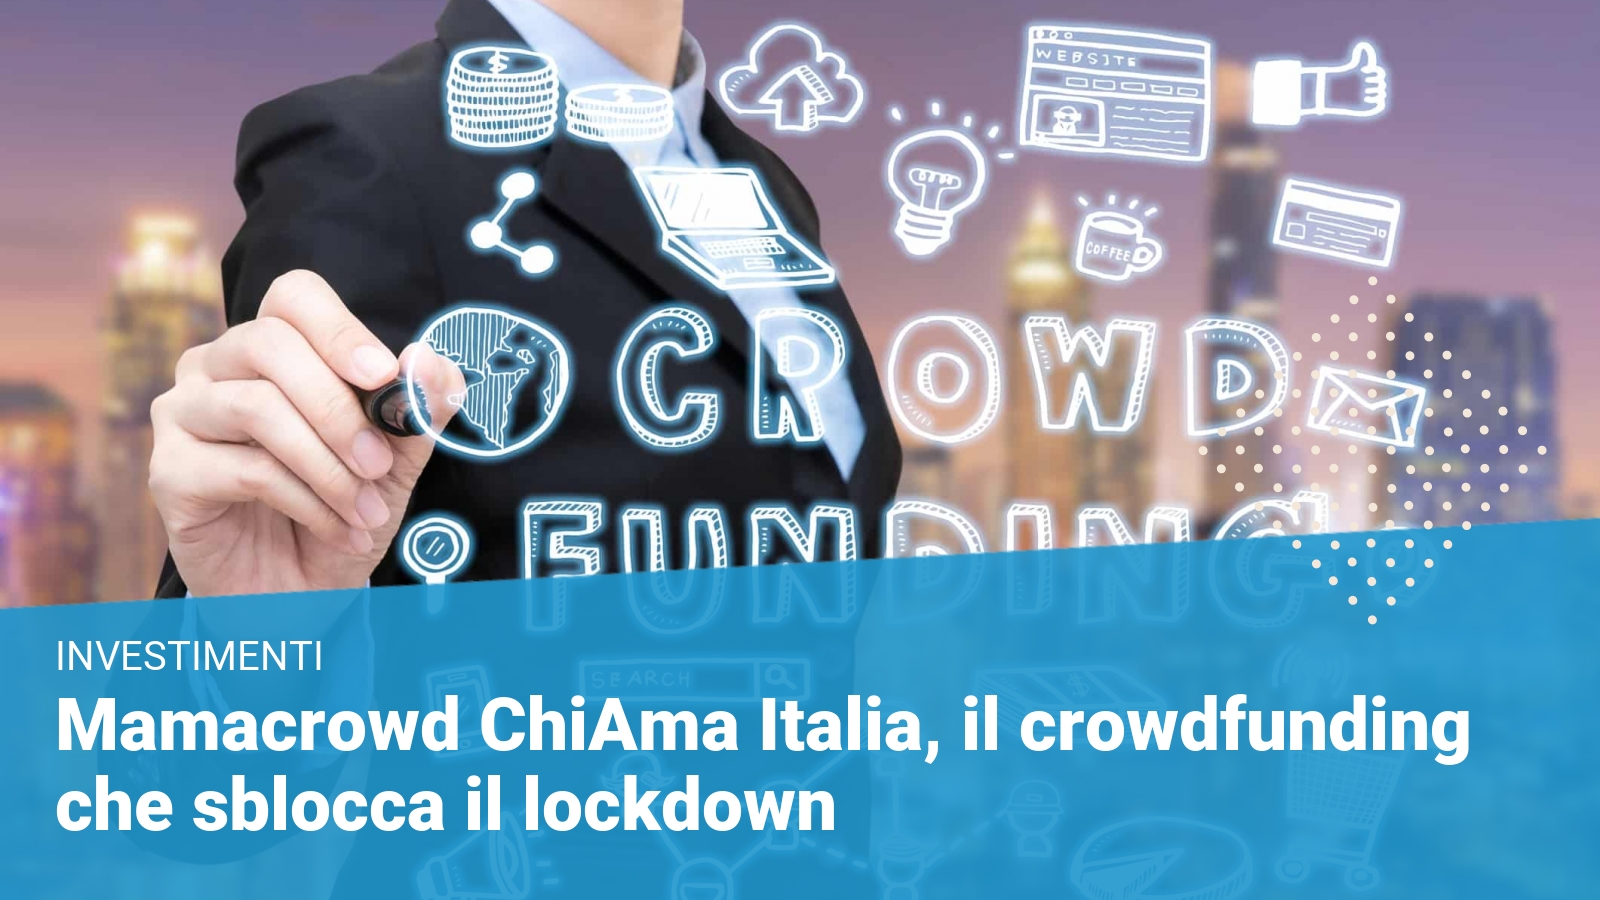 Mamacrowd ChiAma Italia - Financer.com Italia